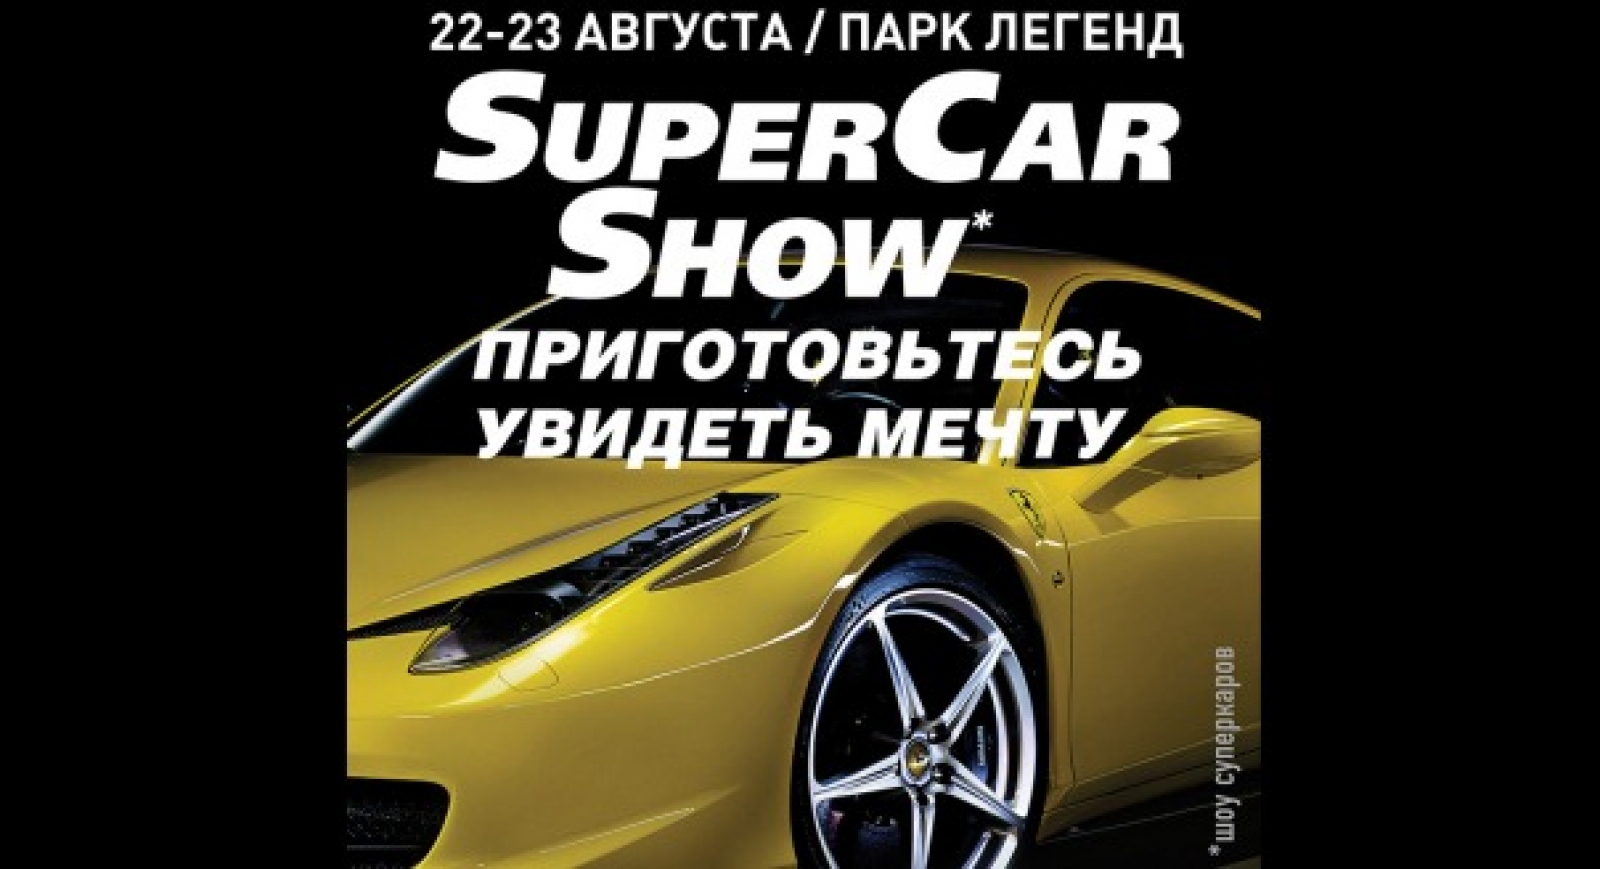 Supercars Show: 22-23 августа